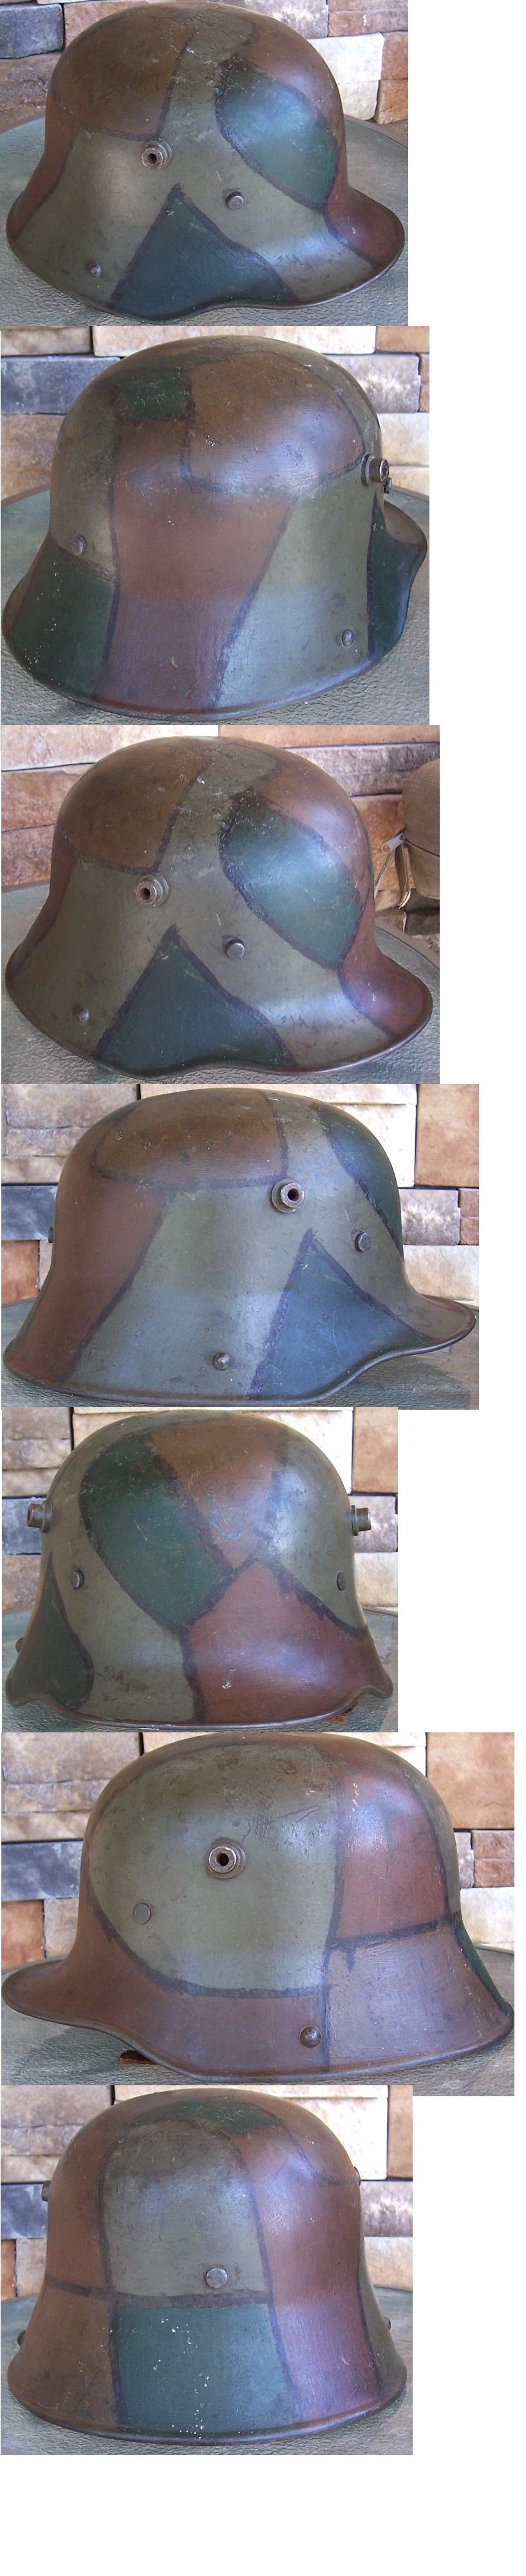 M16 Camo Helmet by ET-64 Personalized.